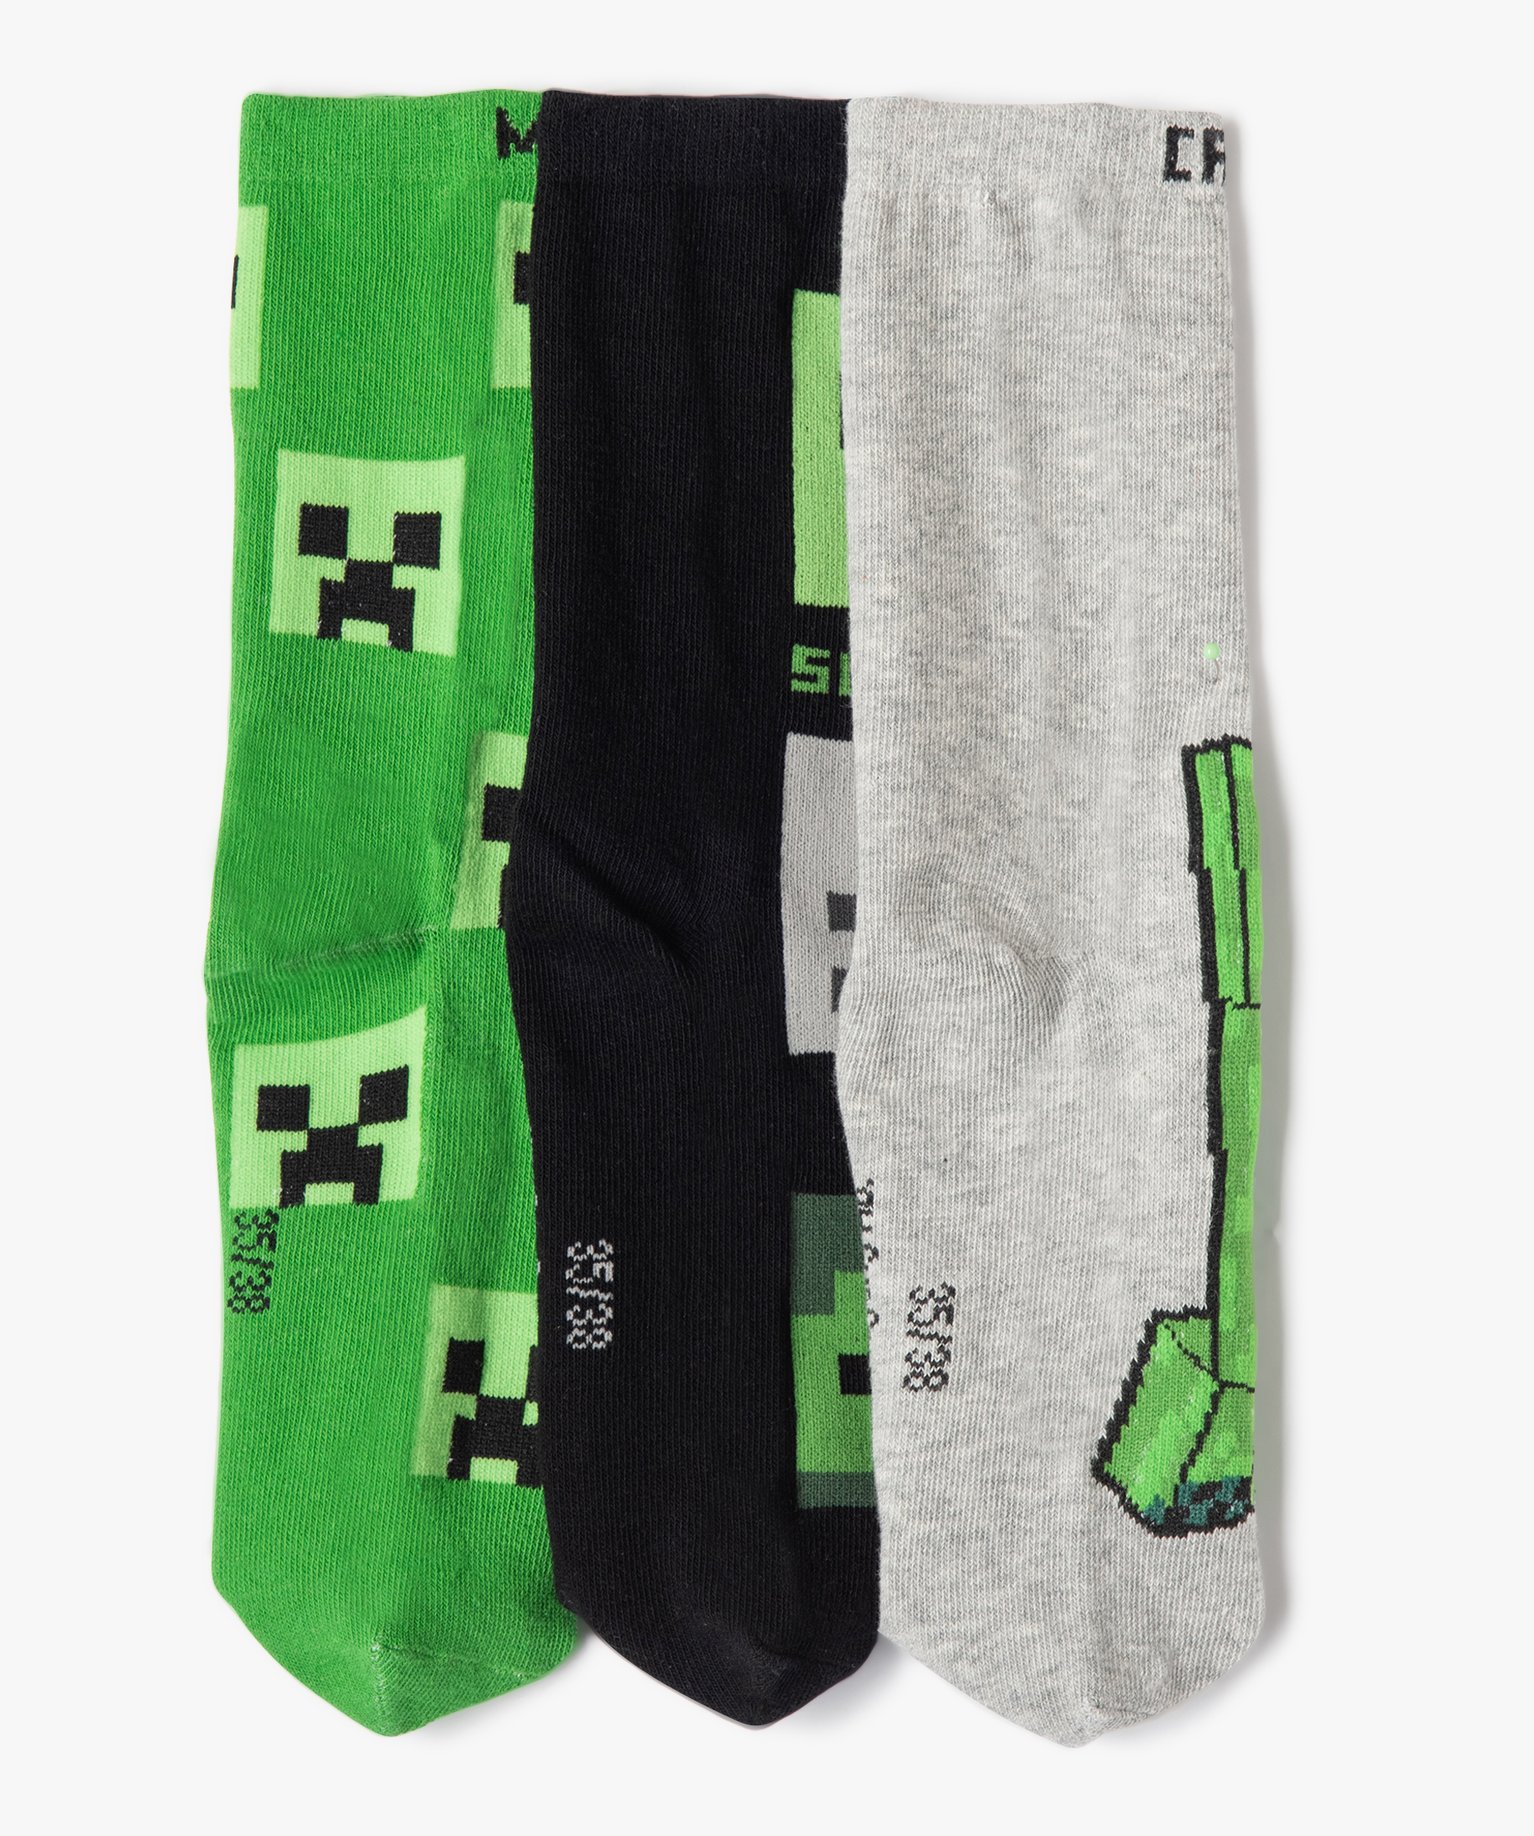 chaussettes hautes a motifs garcon (lot de 3) - minecraft vert garcon